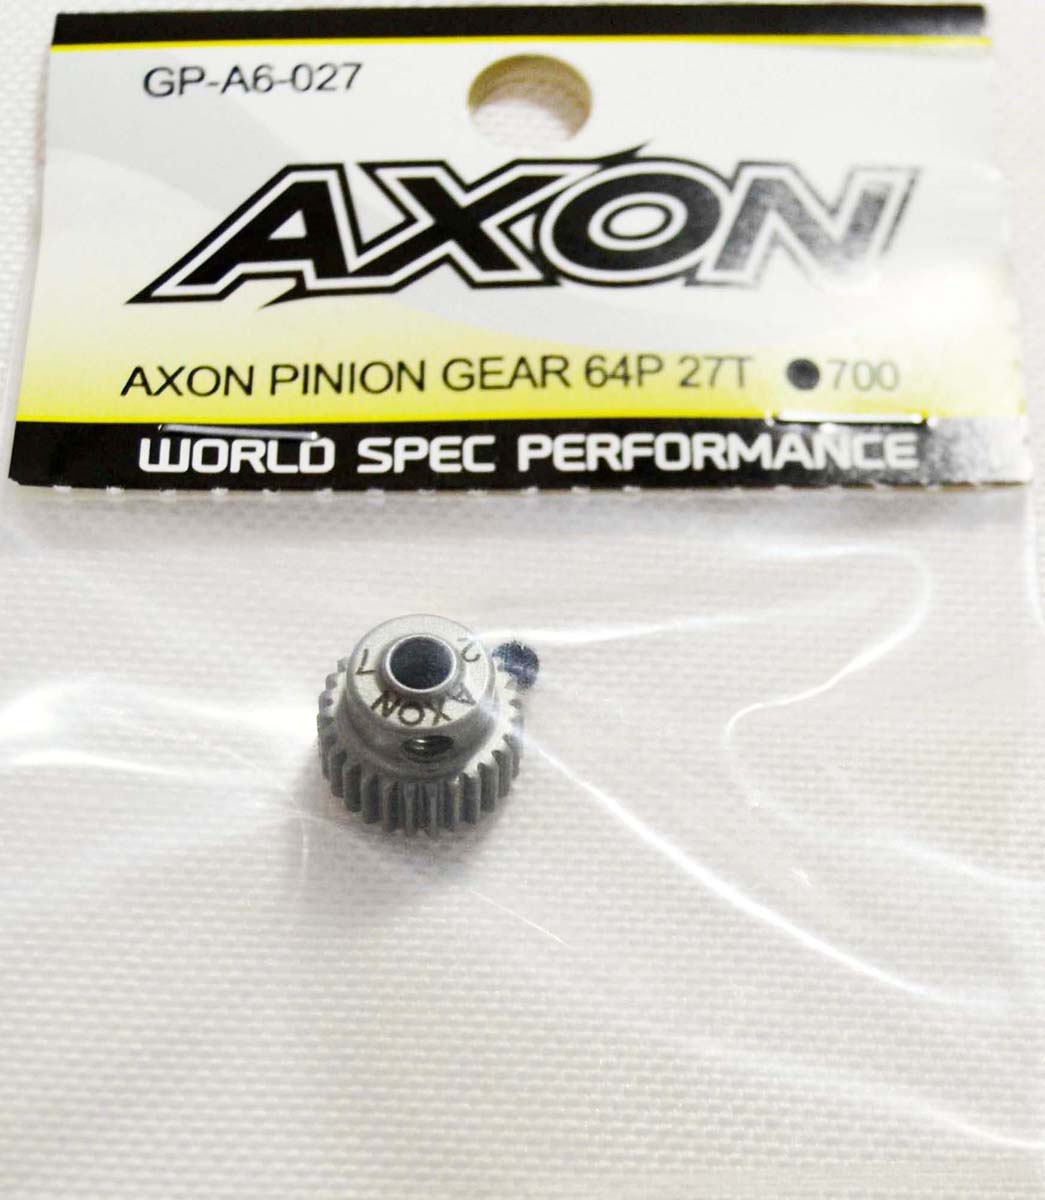 AXON PINION GEAR 64P 27T GP-A6-027 ラジコンパーツ、アクセサリーの商品画像